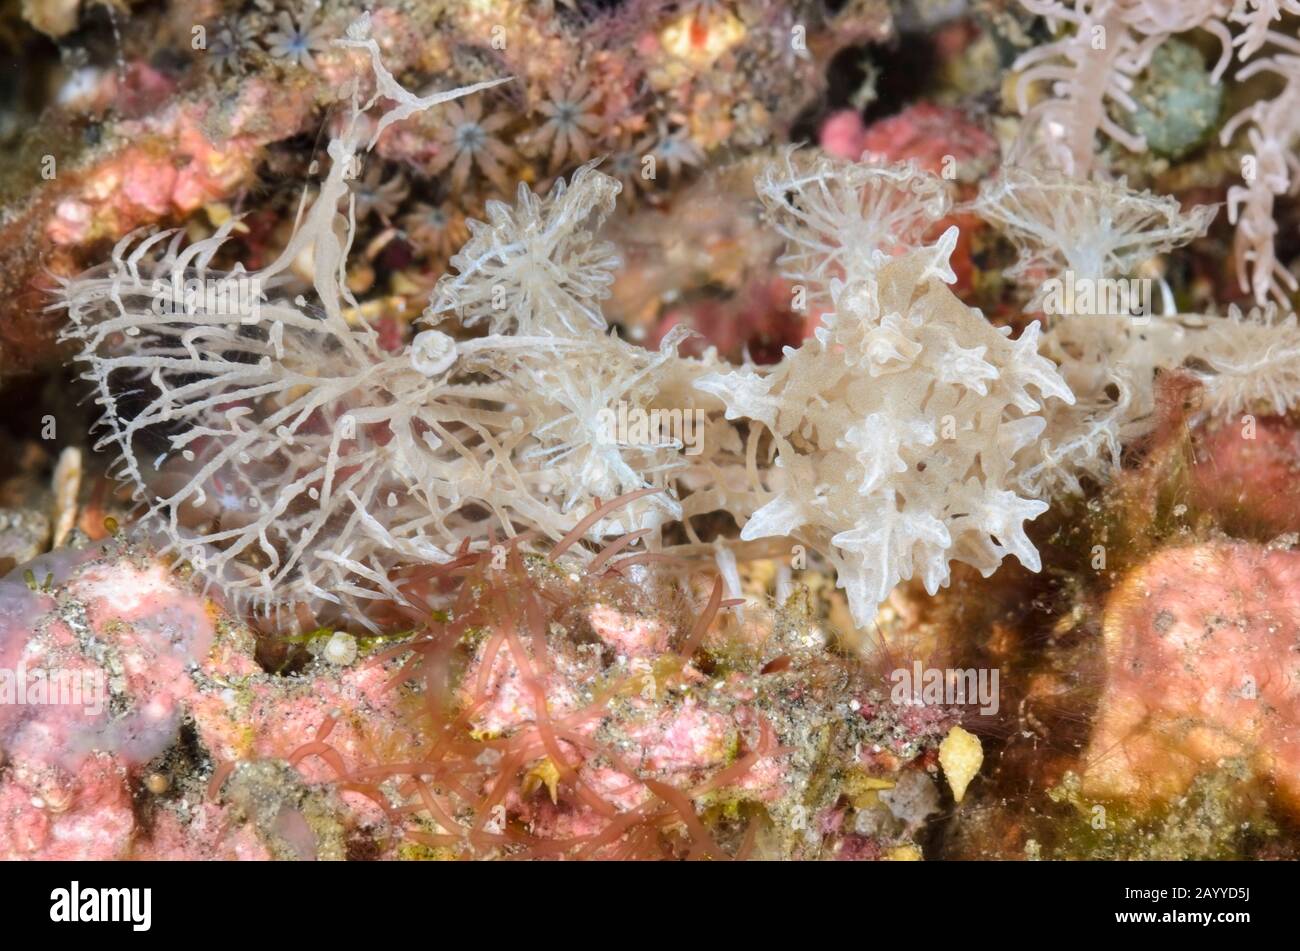 sea slug or nudibranch, Melibe colemani, Lembeh Strait, North Sulawesi, Indonesia, Pacific Stock Photo